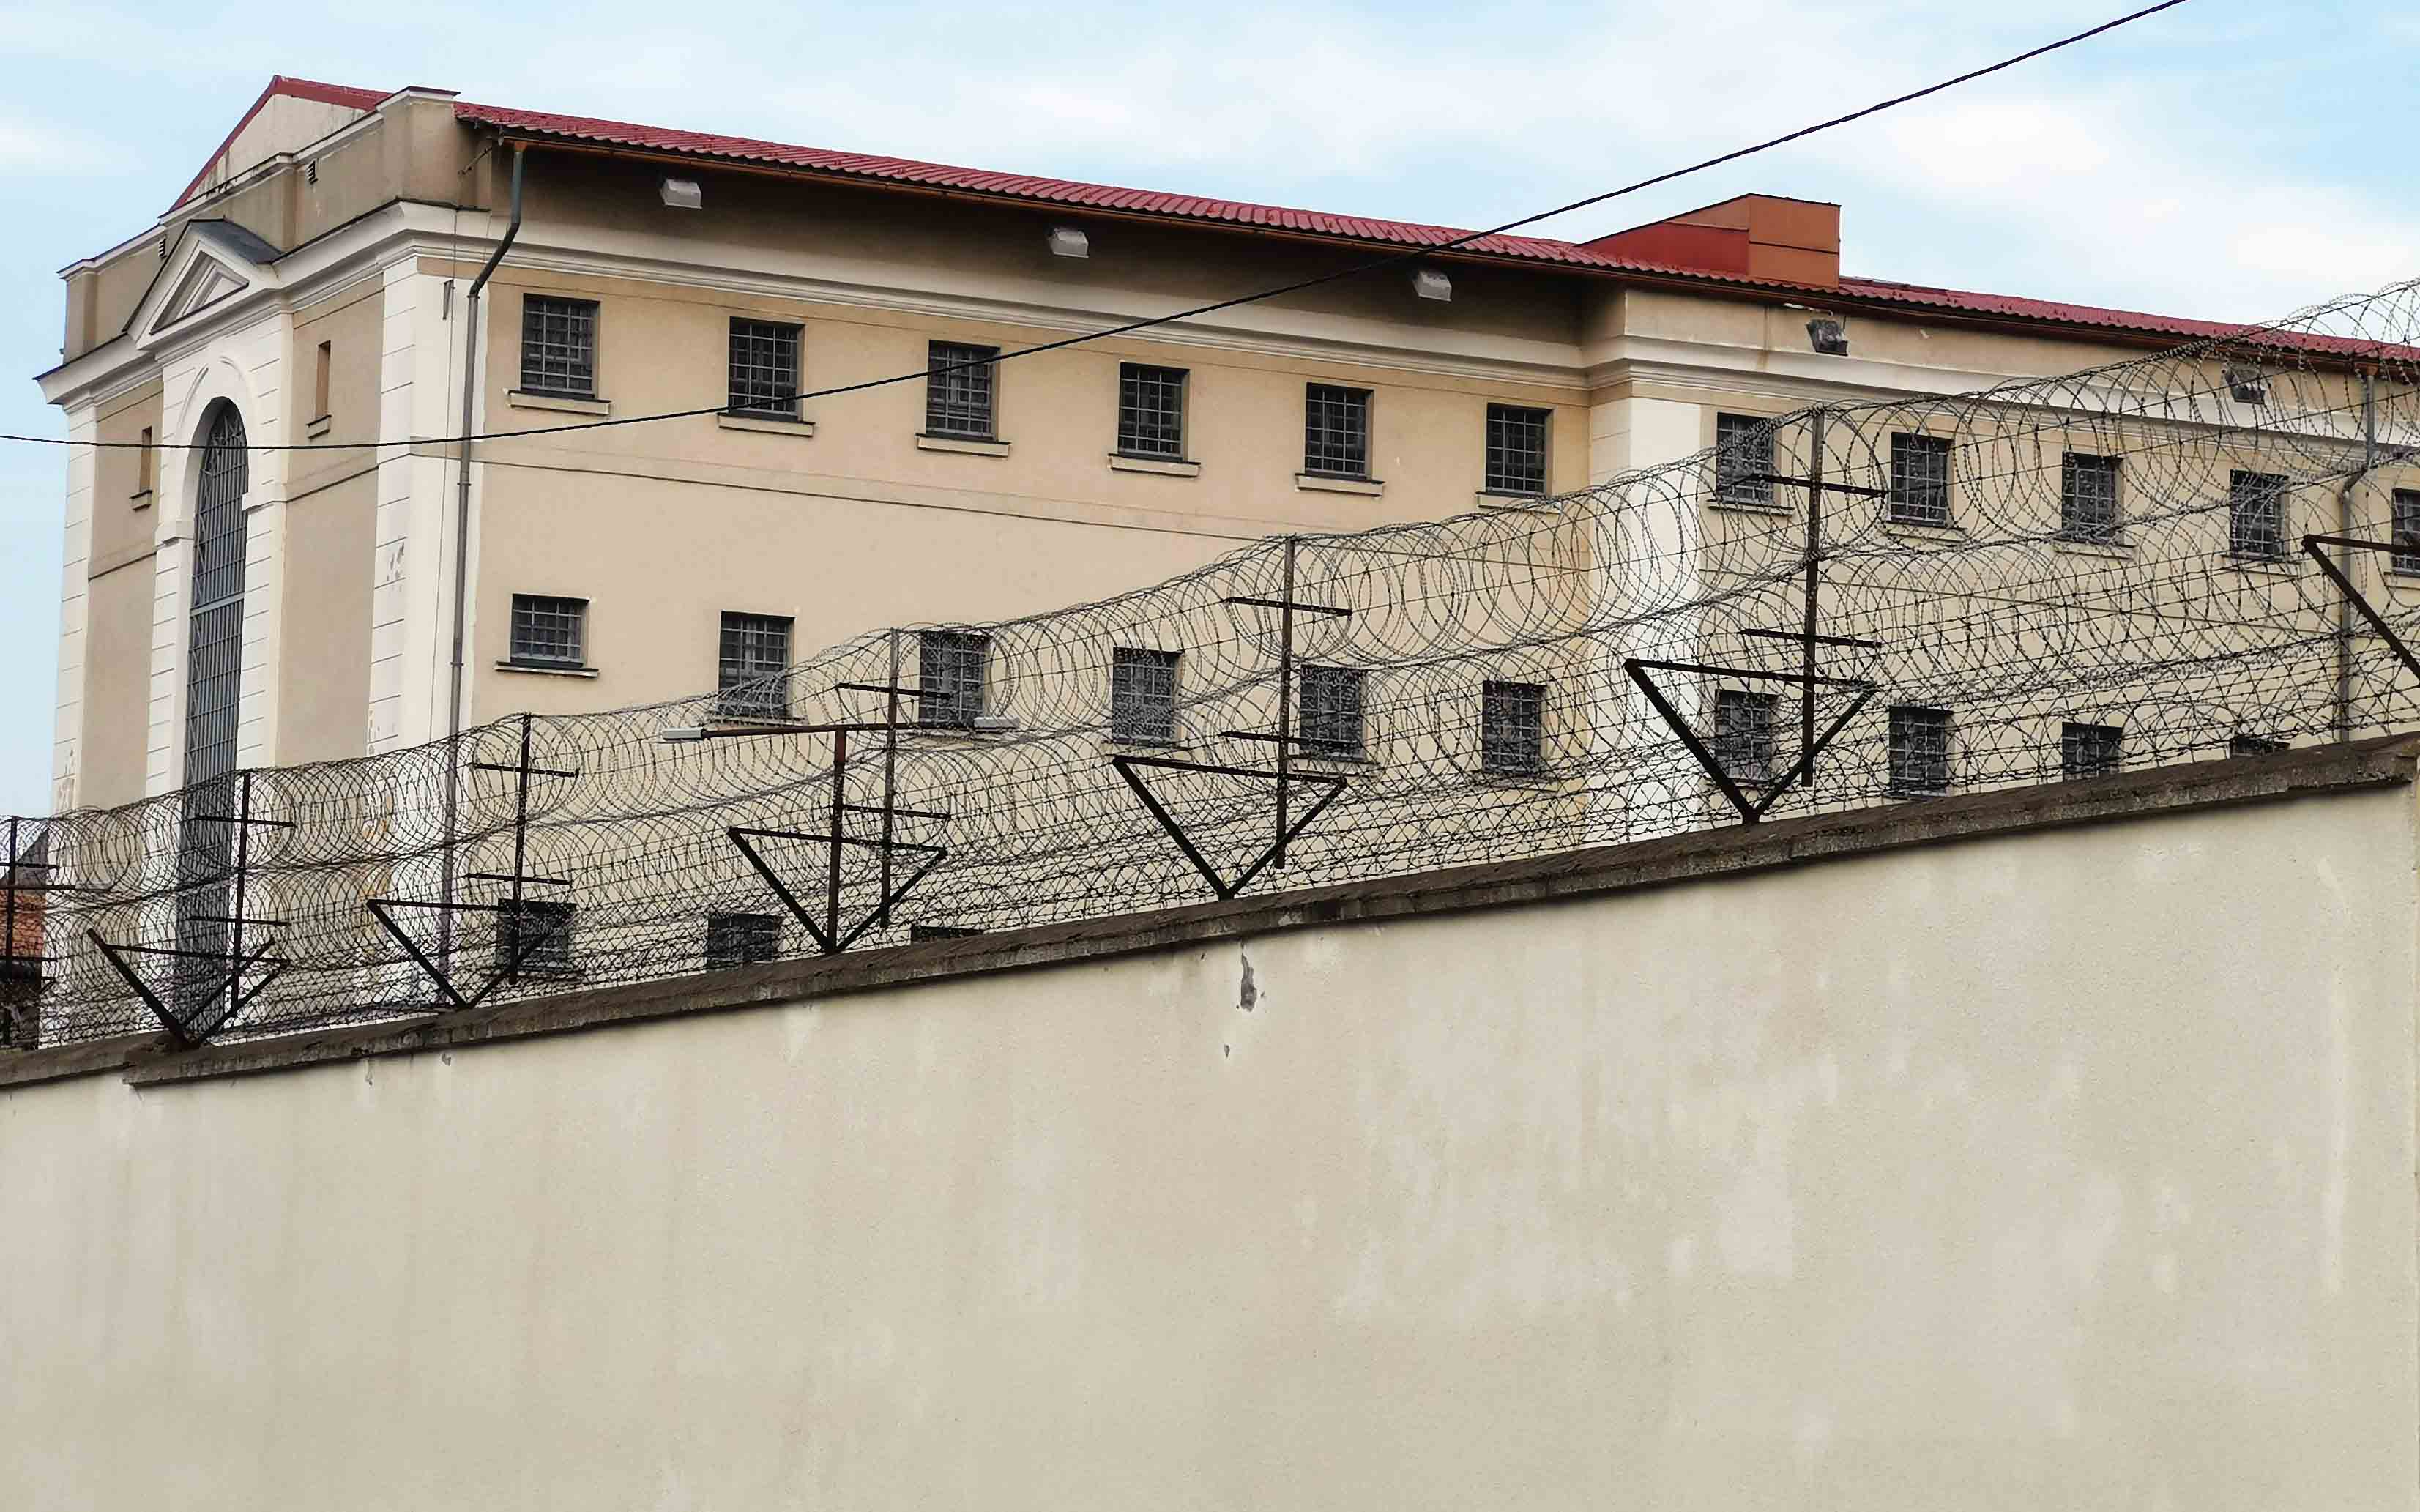 închisoare ungaria kató alpár dnh 2020